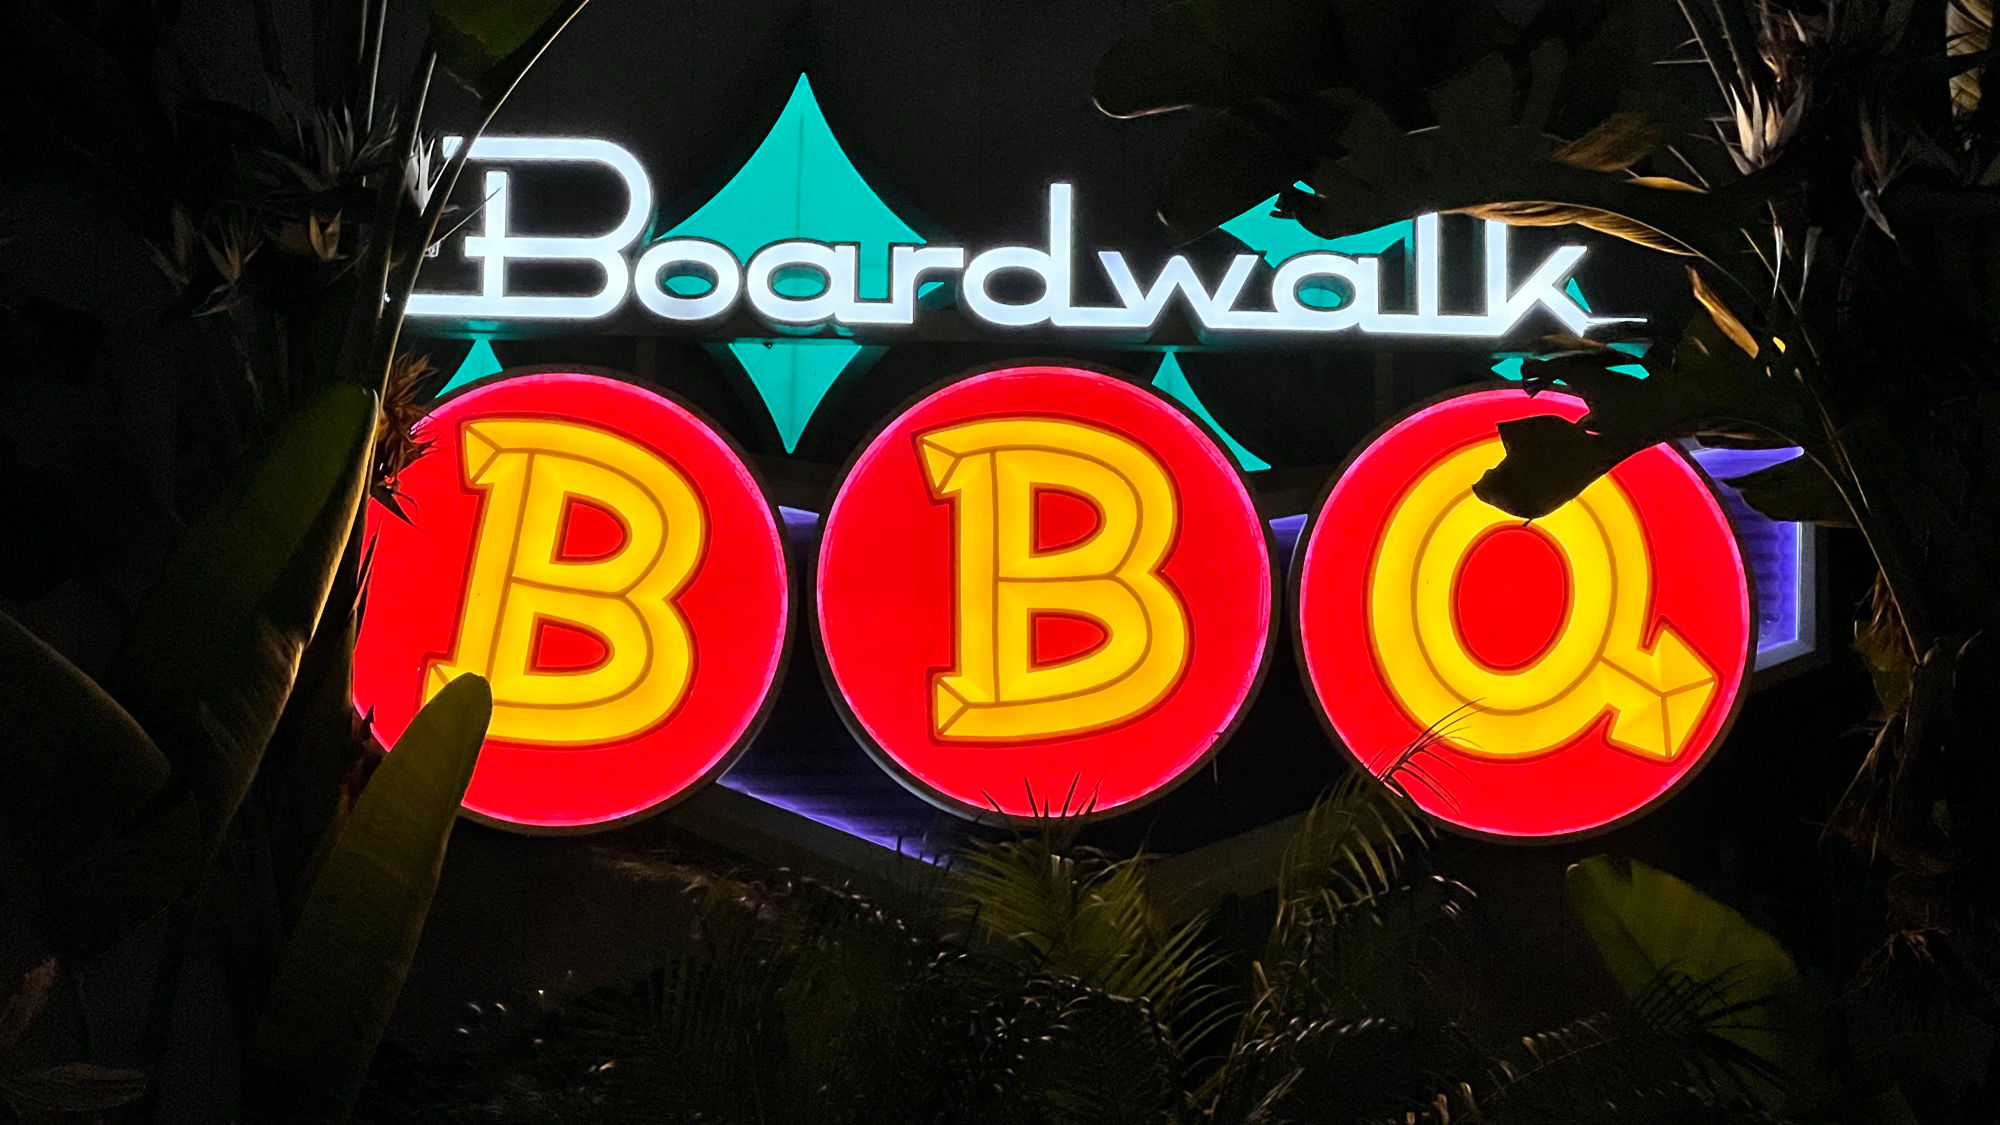 Boardwalk BBQ Sign at Night